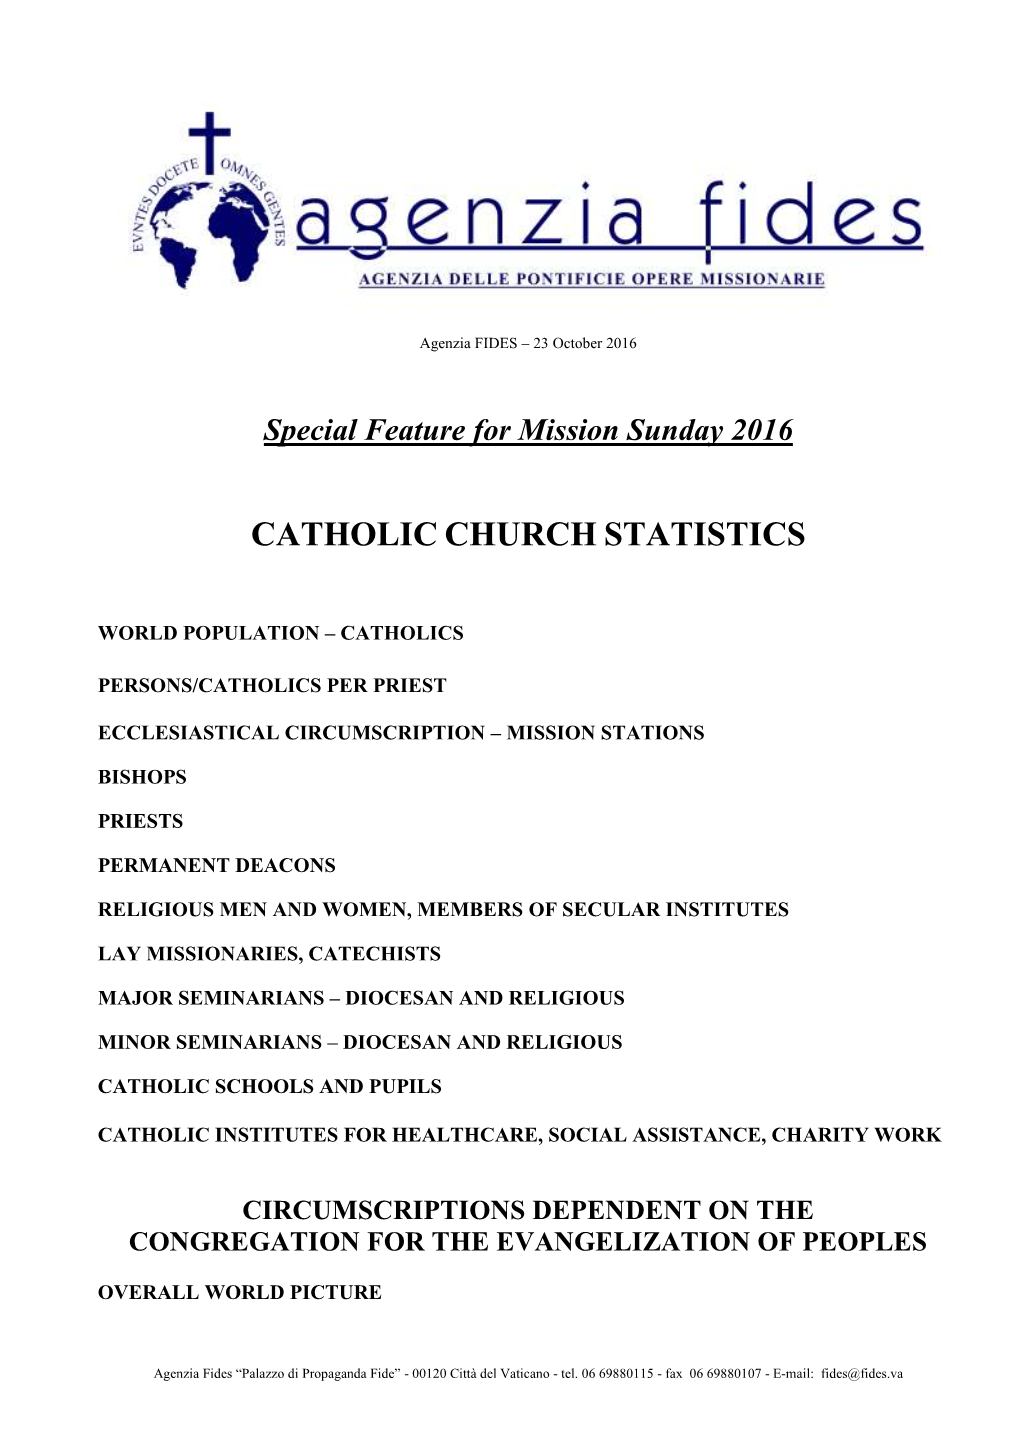 Catholic Church Statistics